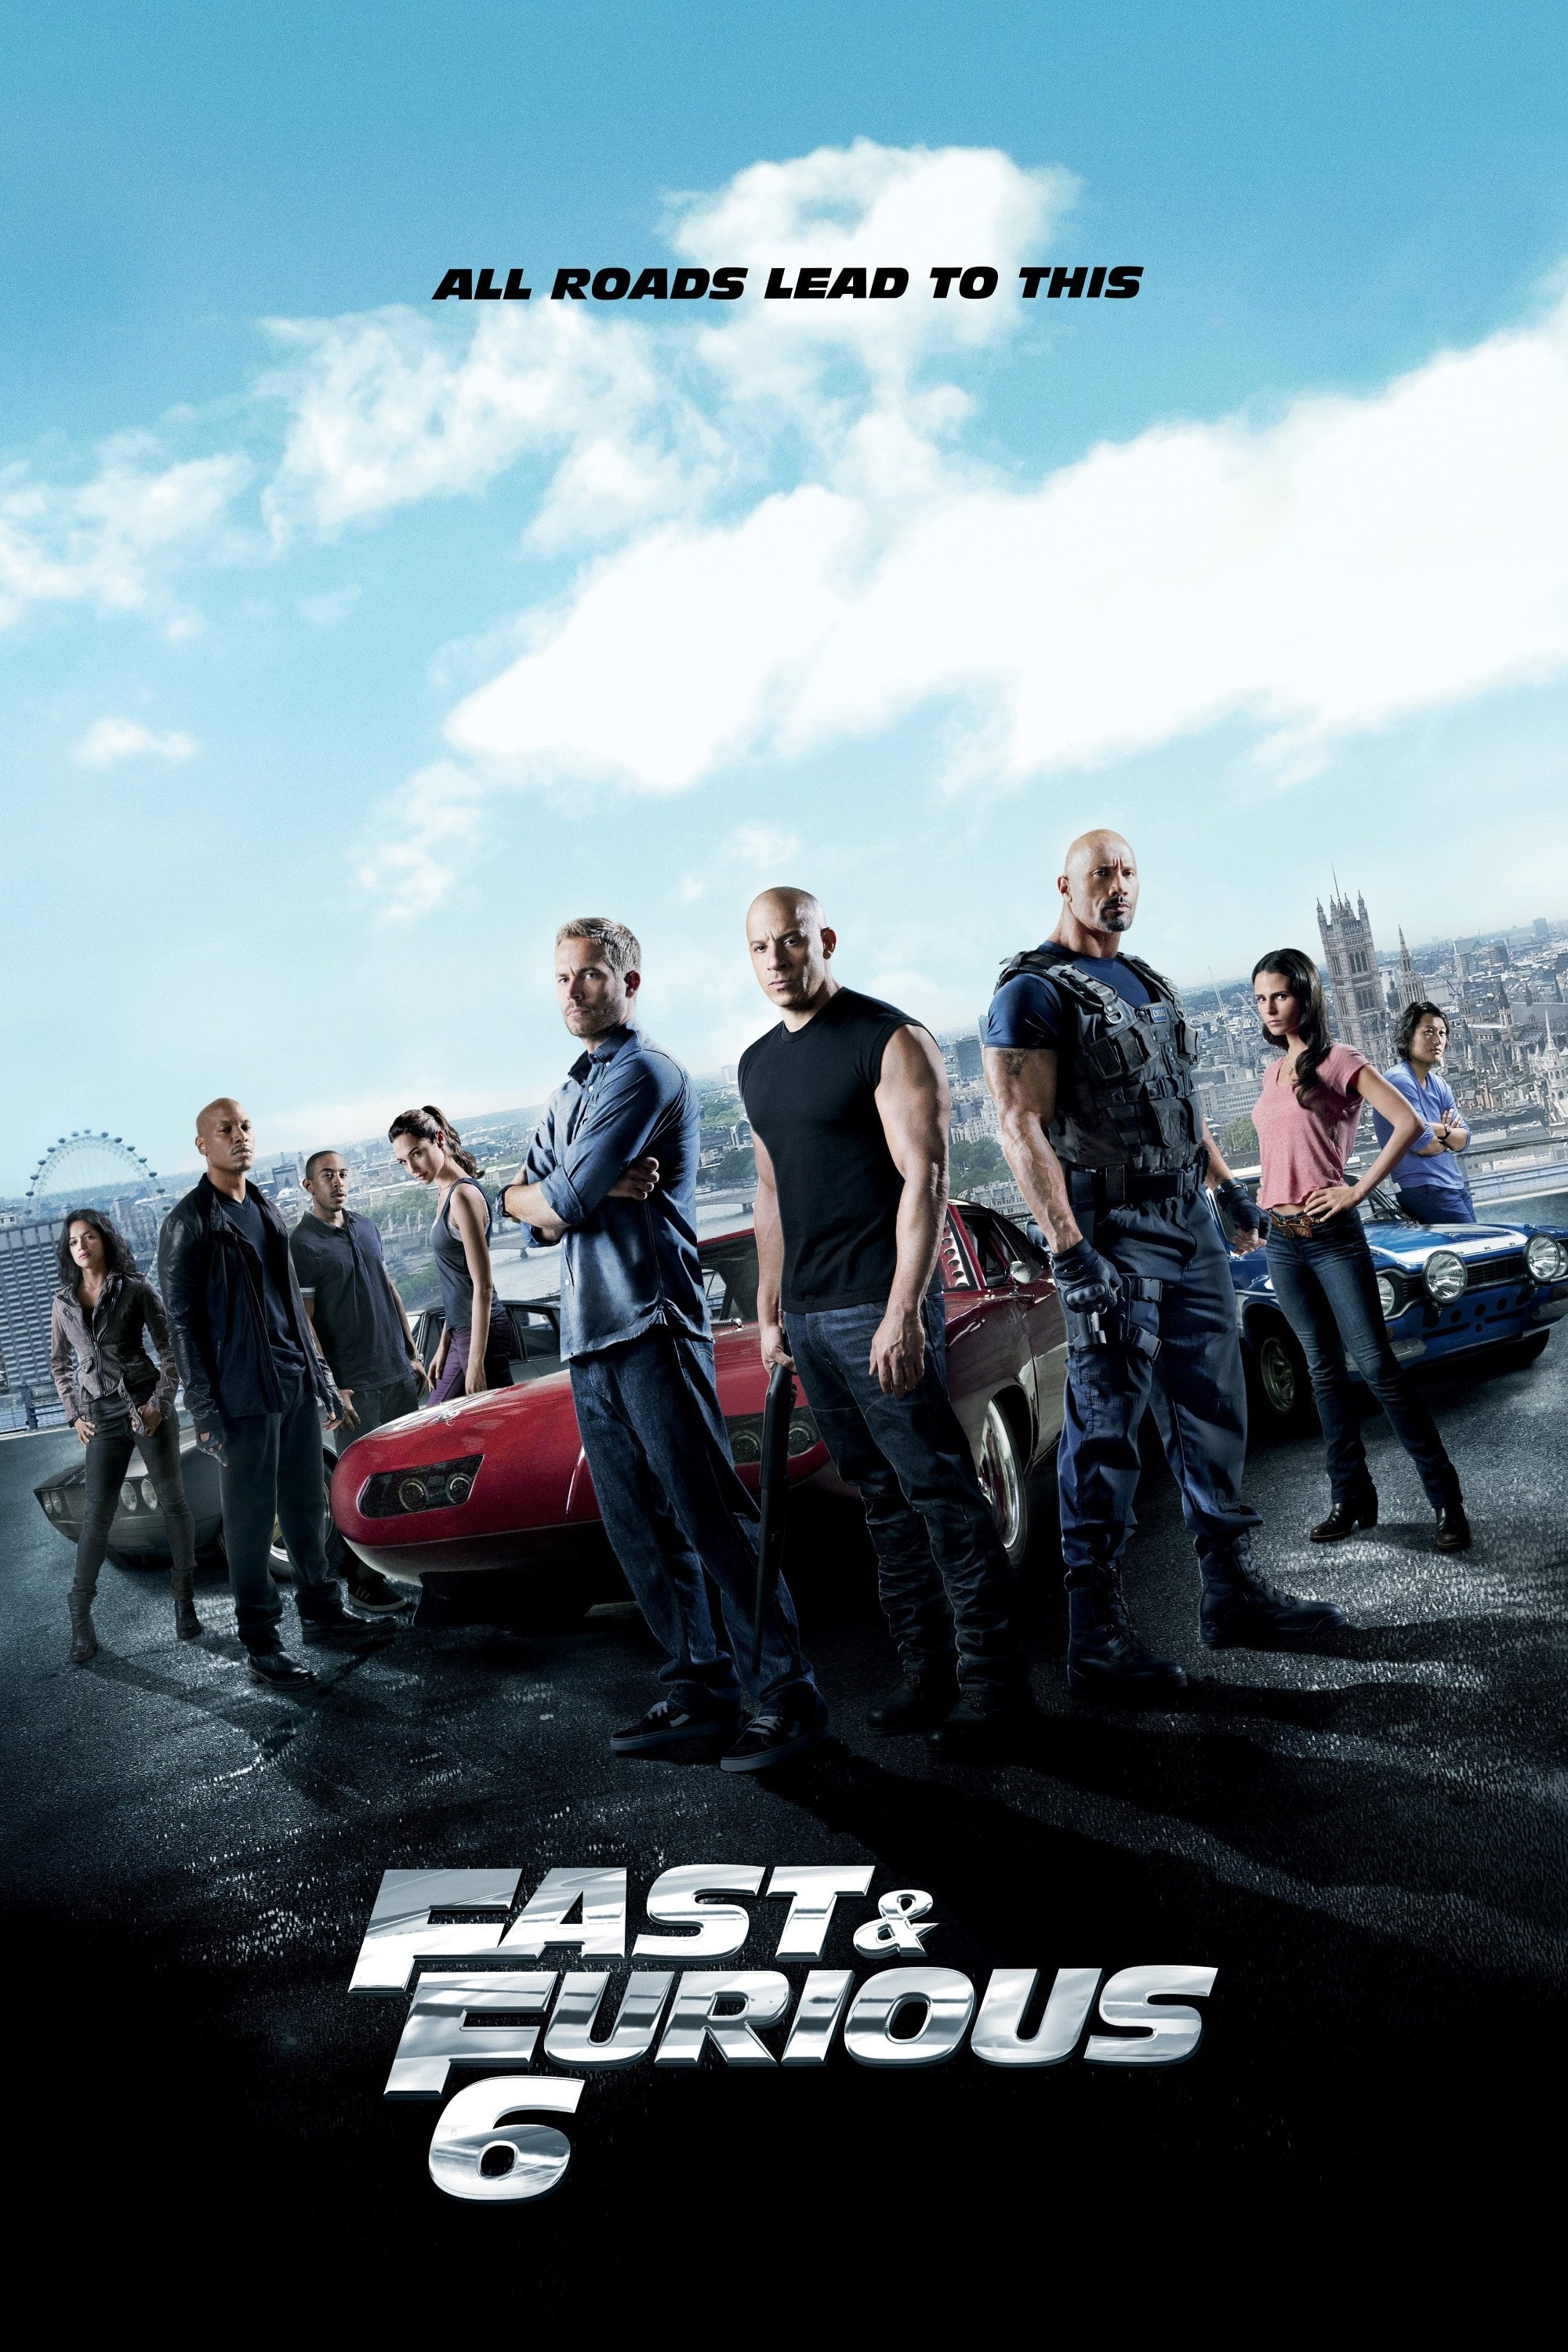 Fastcast - 06 - Fast & Furious 6 (2013)